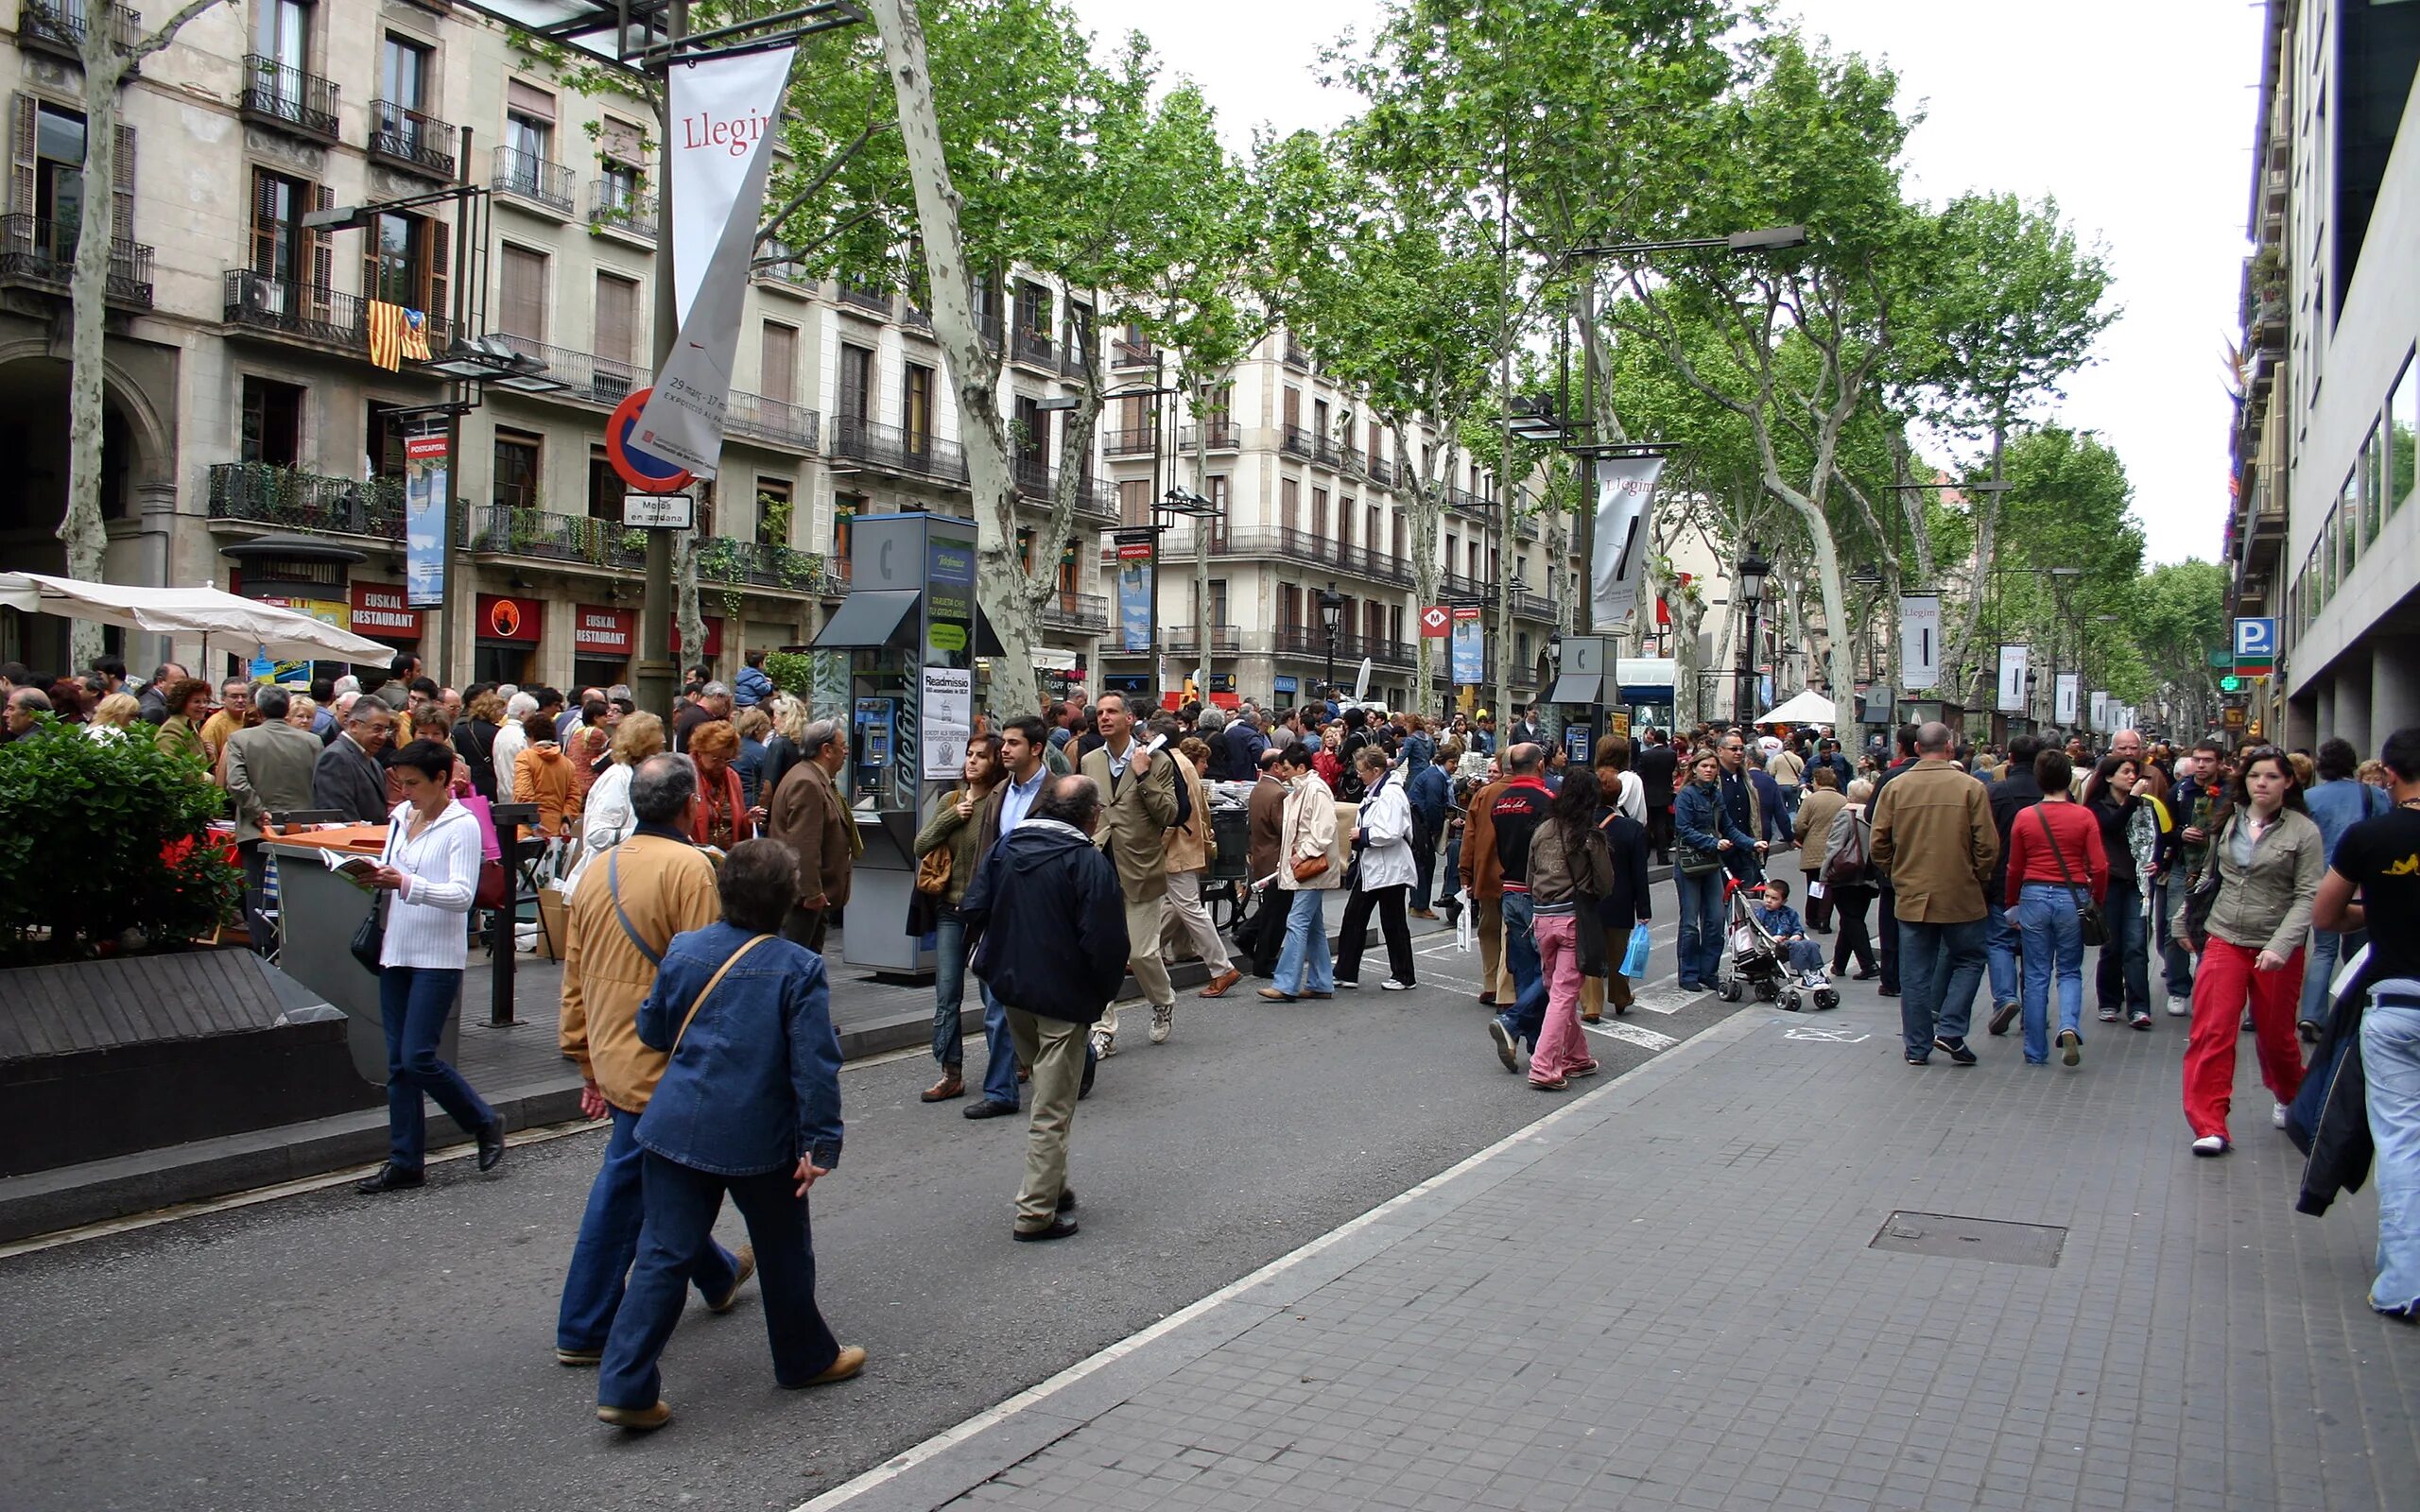 День живых улиц. Улица Рамбла в Барселоне. Бульвар Рамблас в Барселоне. Люди в городе. Барселона улицы.